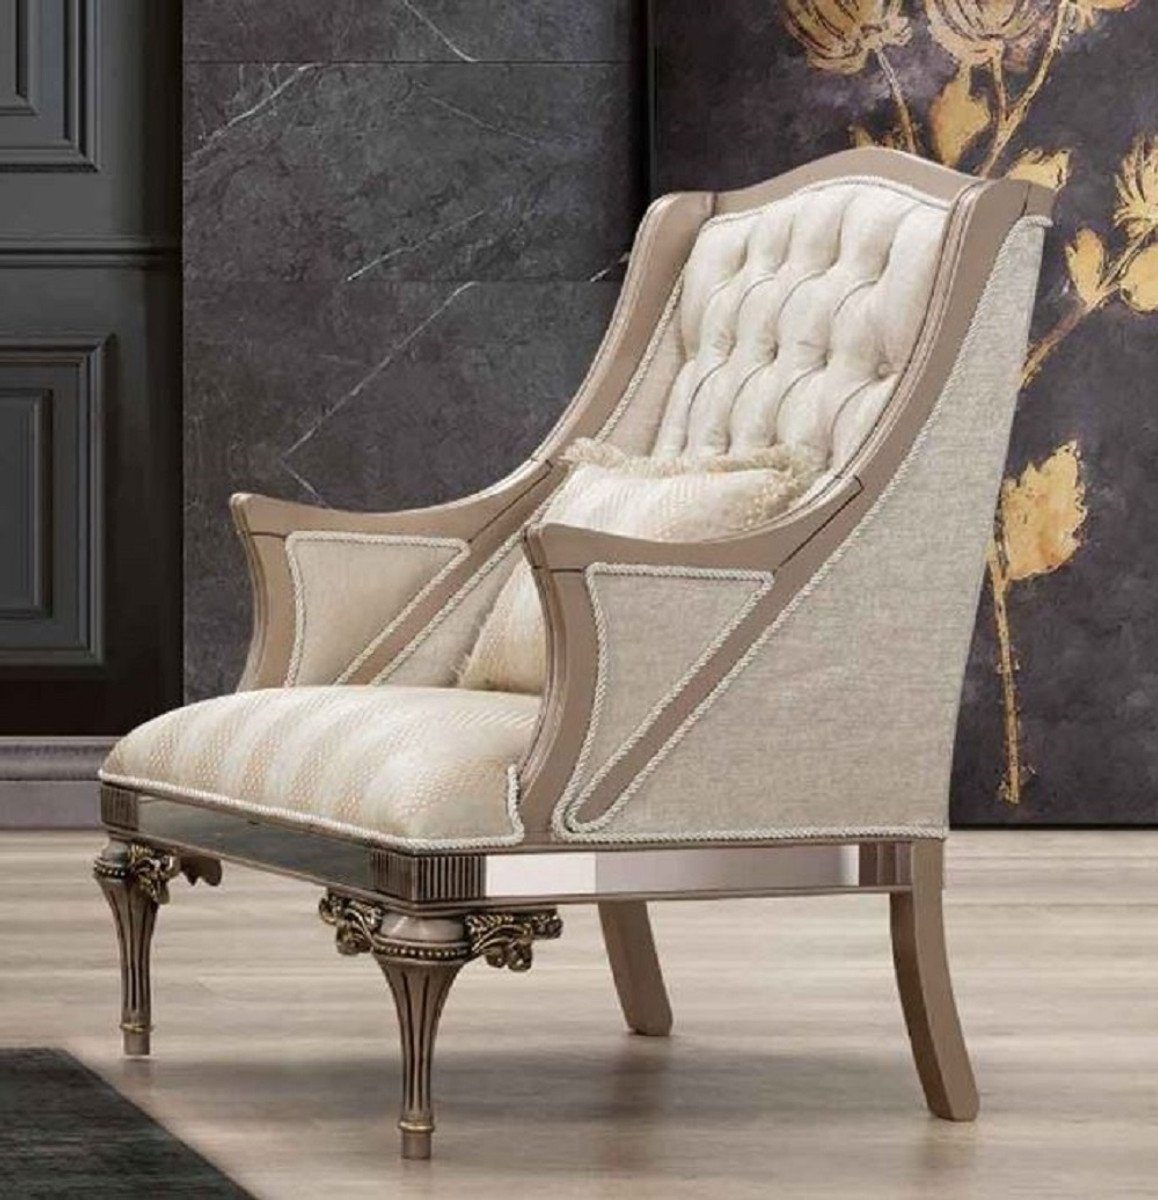 Casa Padrino Sessel Luxus Barock Sessel - Handgefertigter Wohnzimmer Sessel im Barockstil - Barock Wohnzimmer & Hotel Möbel - Edel & Prunkvoll